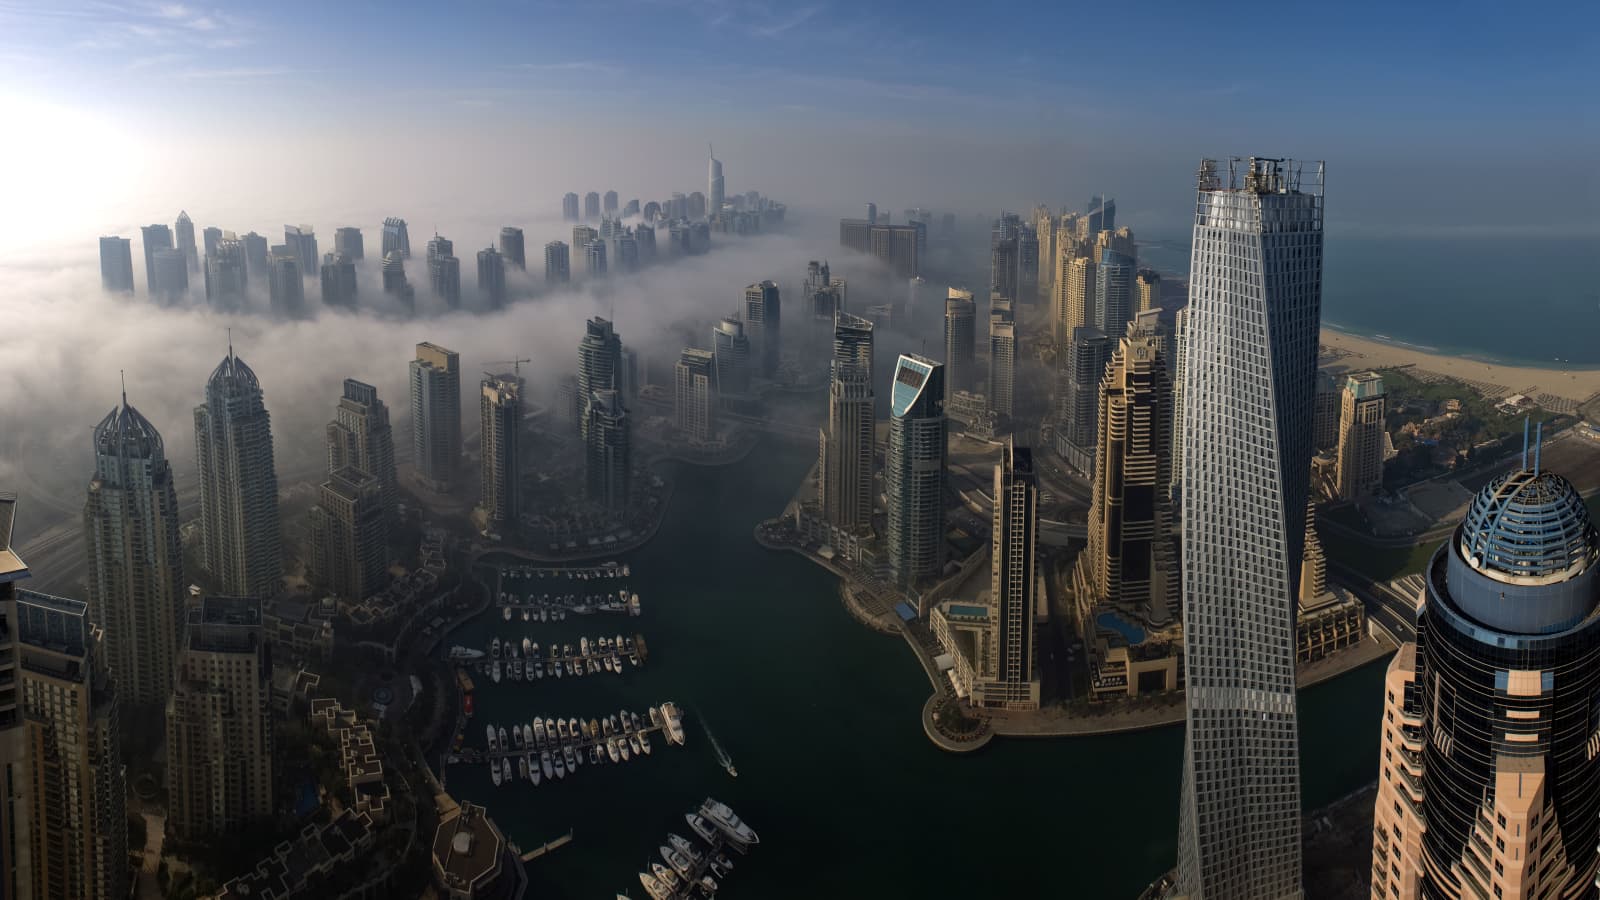 Dubai announces $8.7 trillion economic plan to boost trade, investment and global hub status